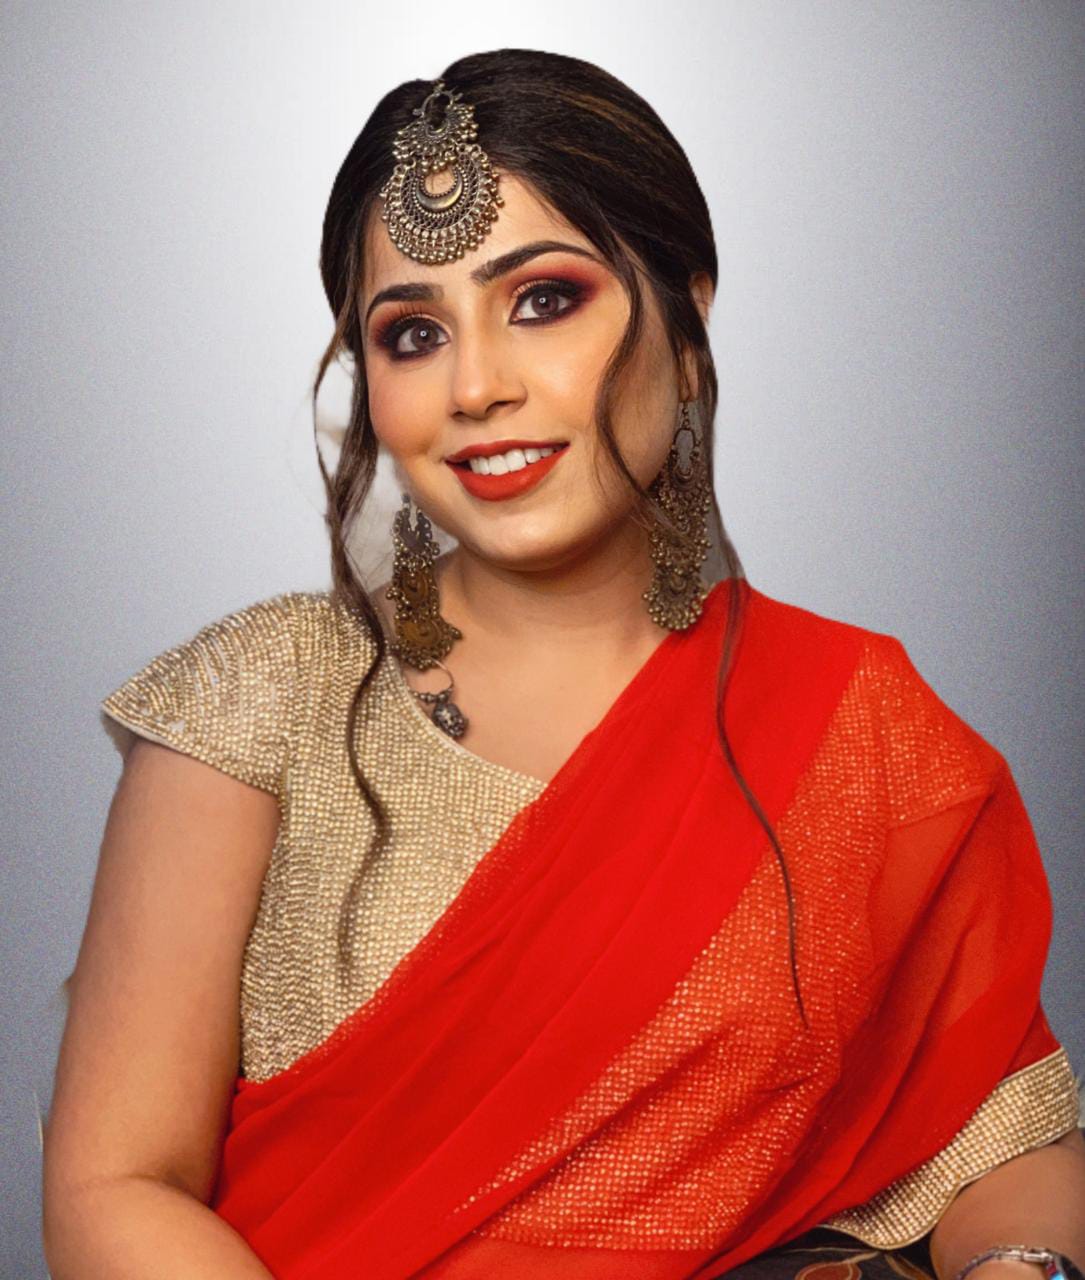 pooja-gupta-makeup-artist-delhi-ncr-olready